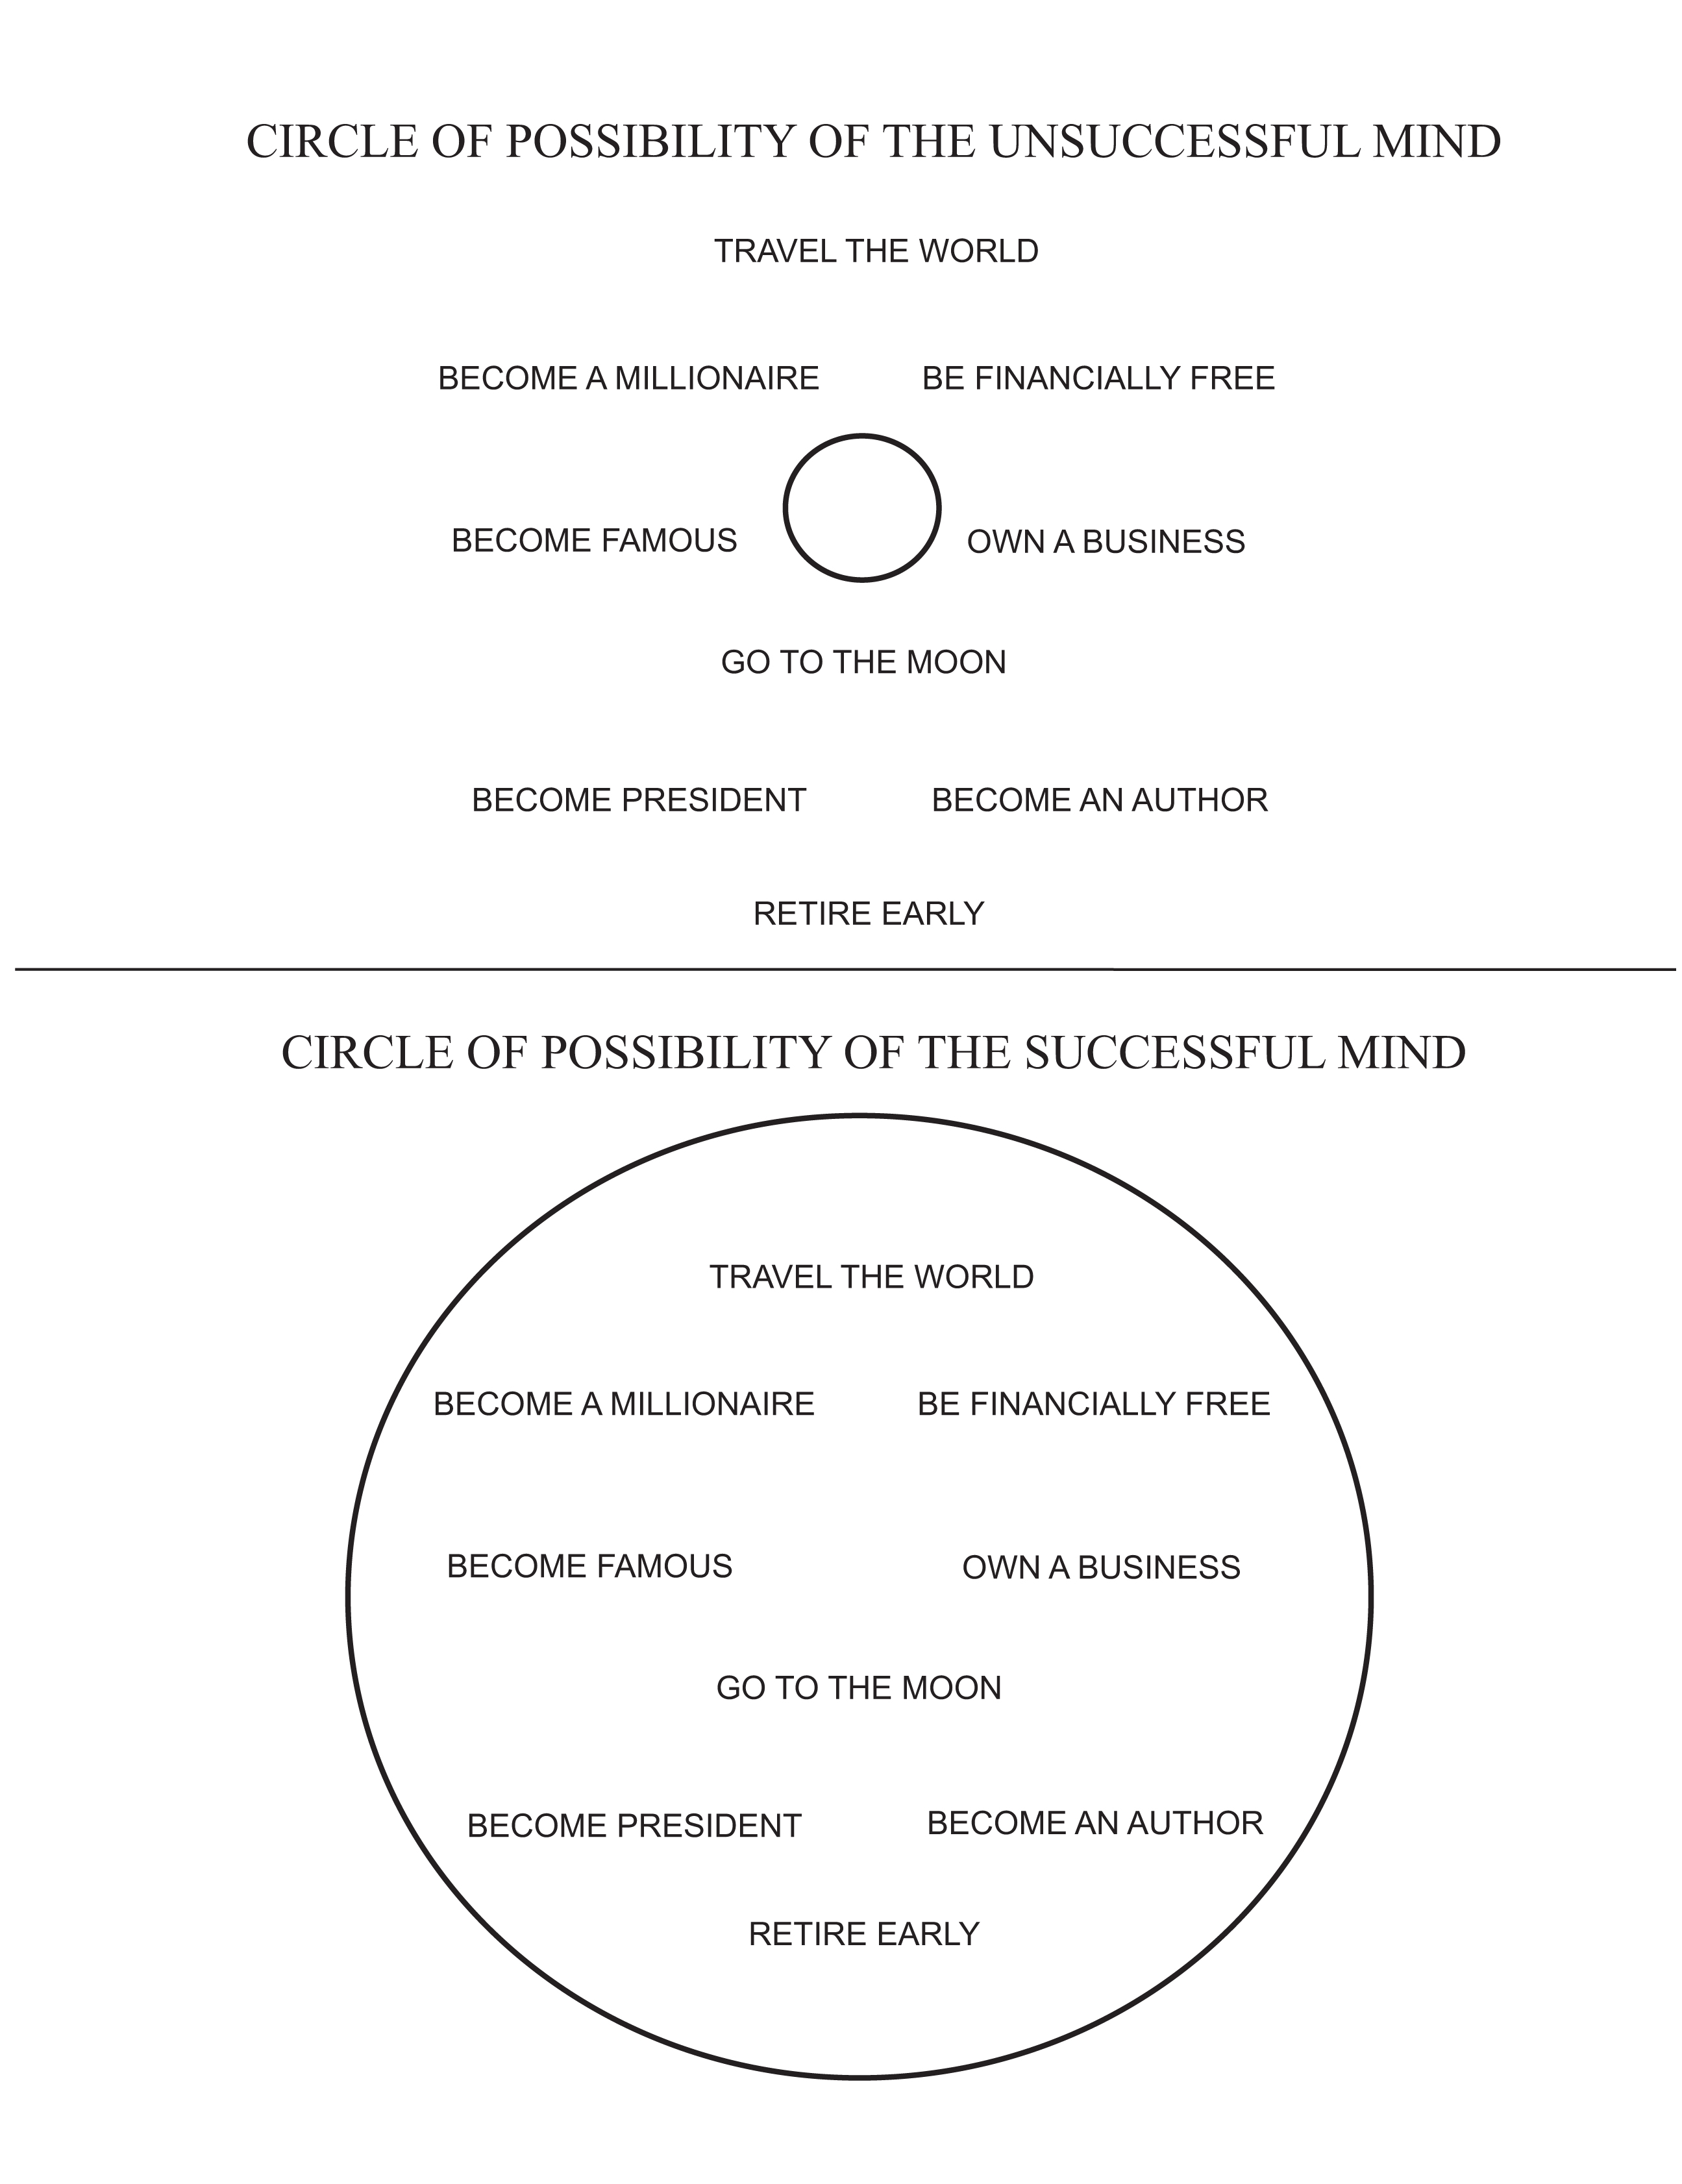 CircleofPossibility2